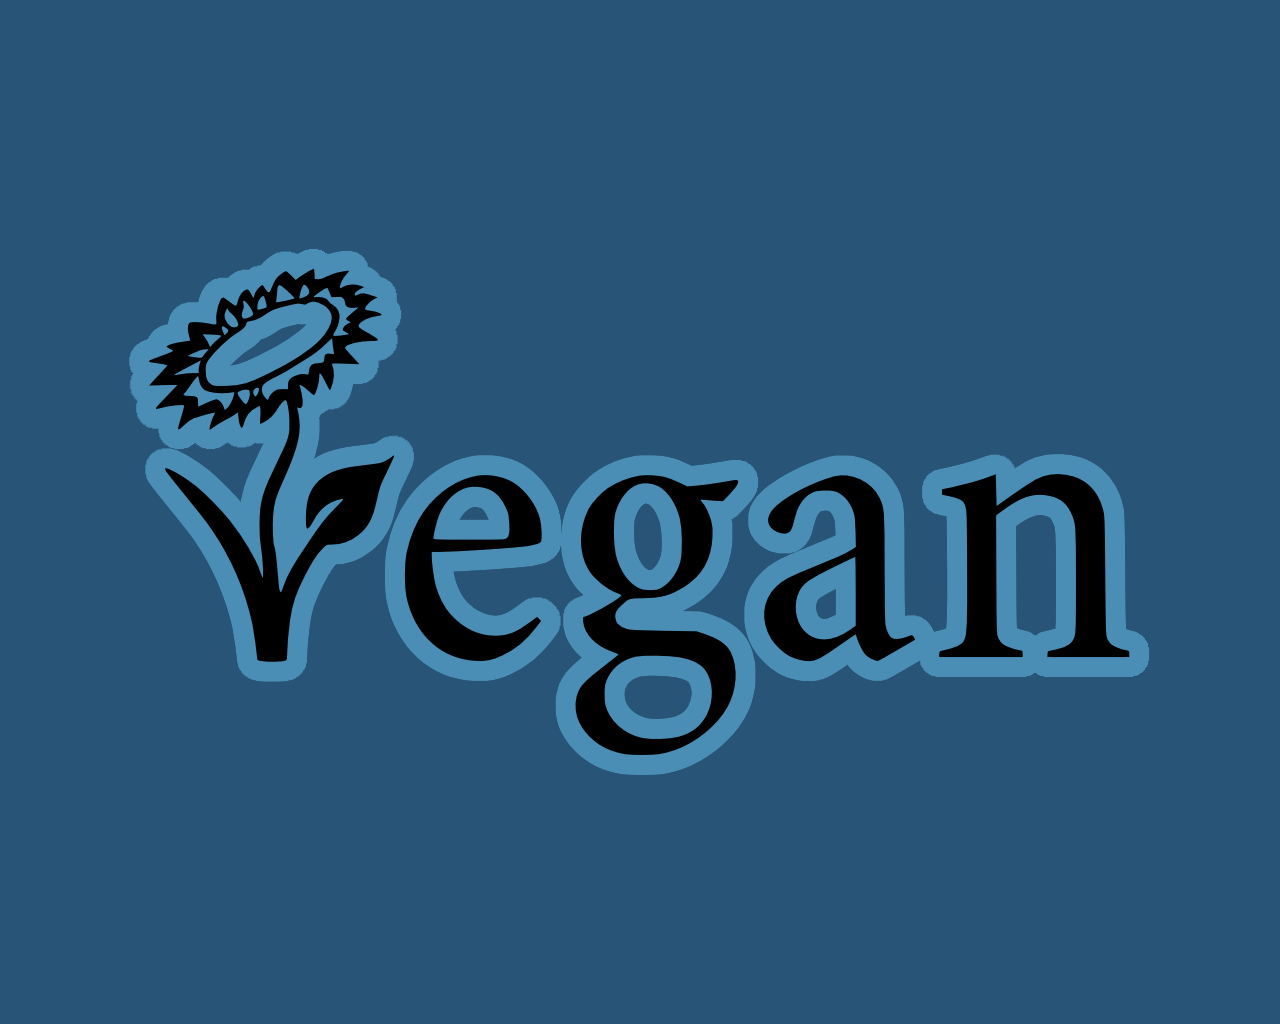 Filosofa Vegana La definicin de veganismo